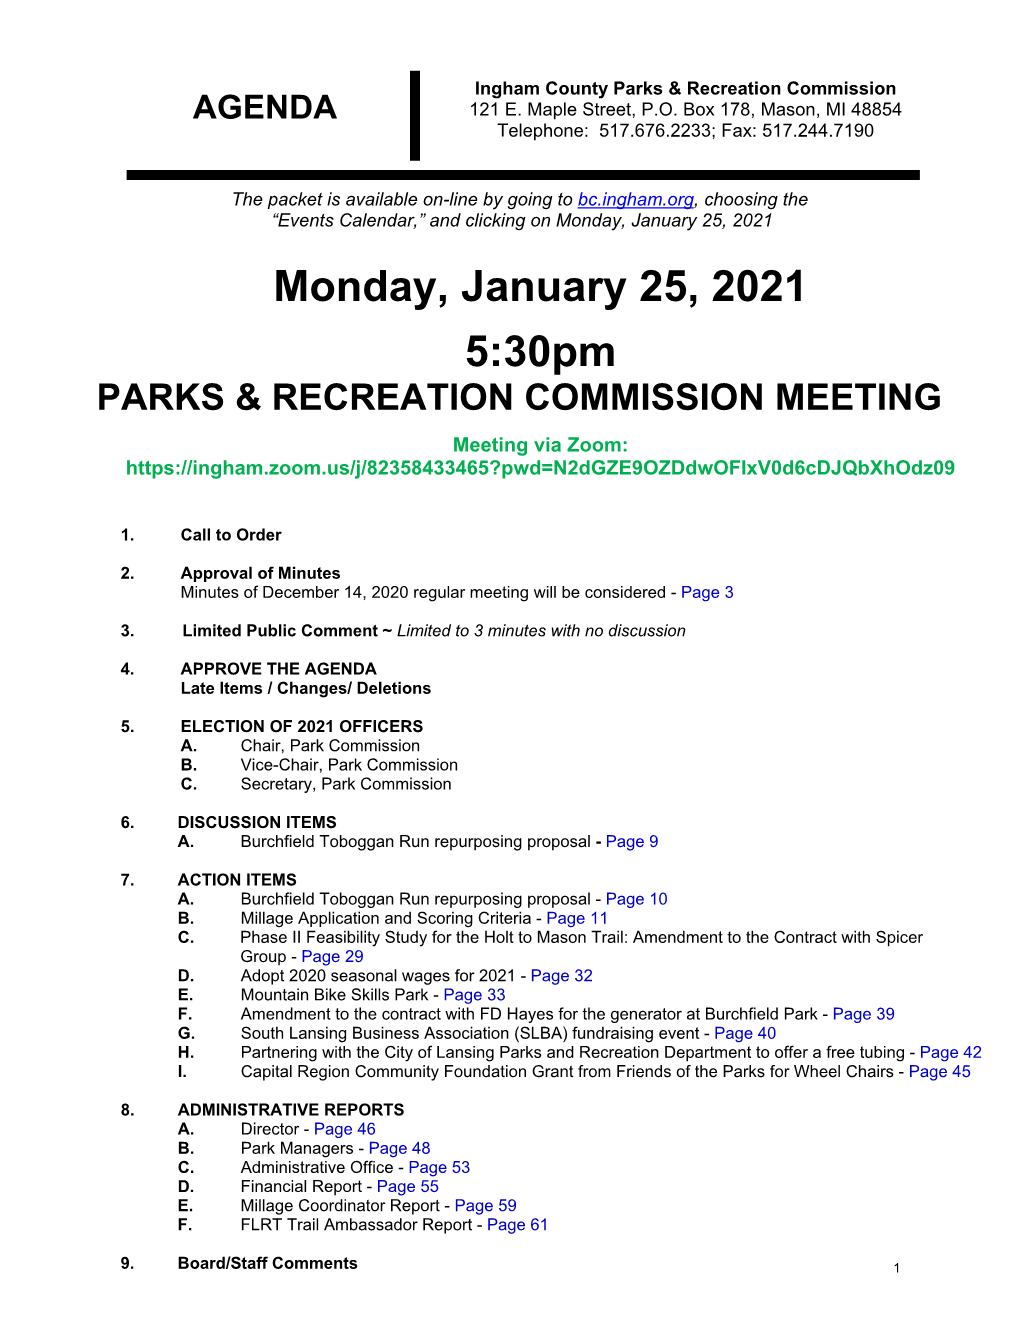 AGENDA Monday, January 25, 2021 5:30Pm PARKS & RECREATION